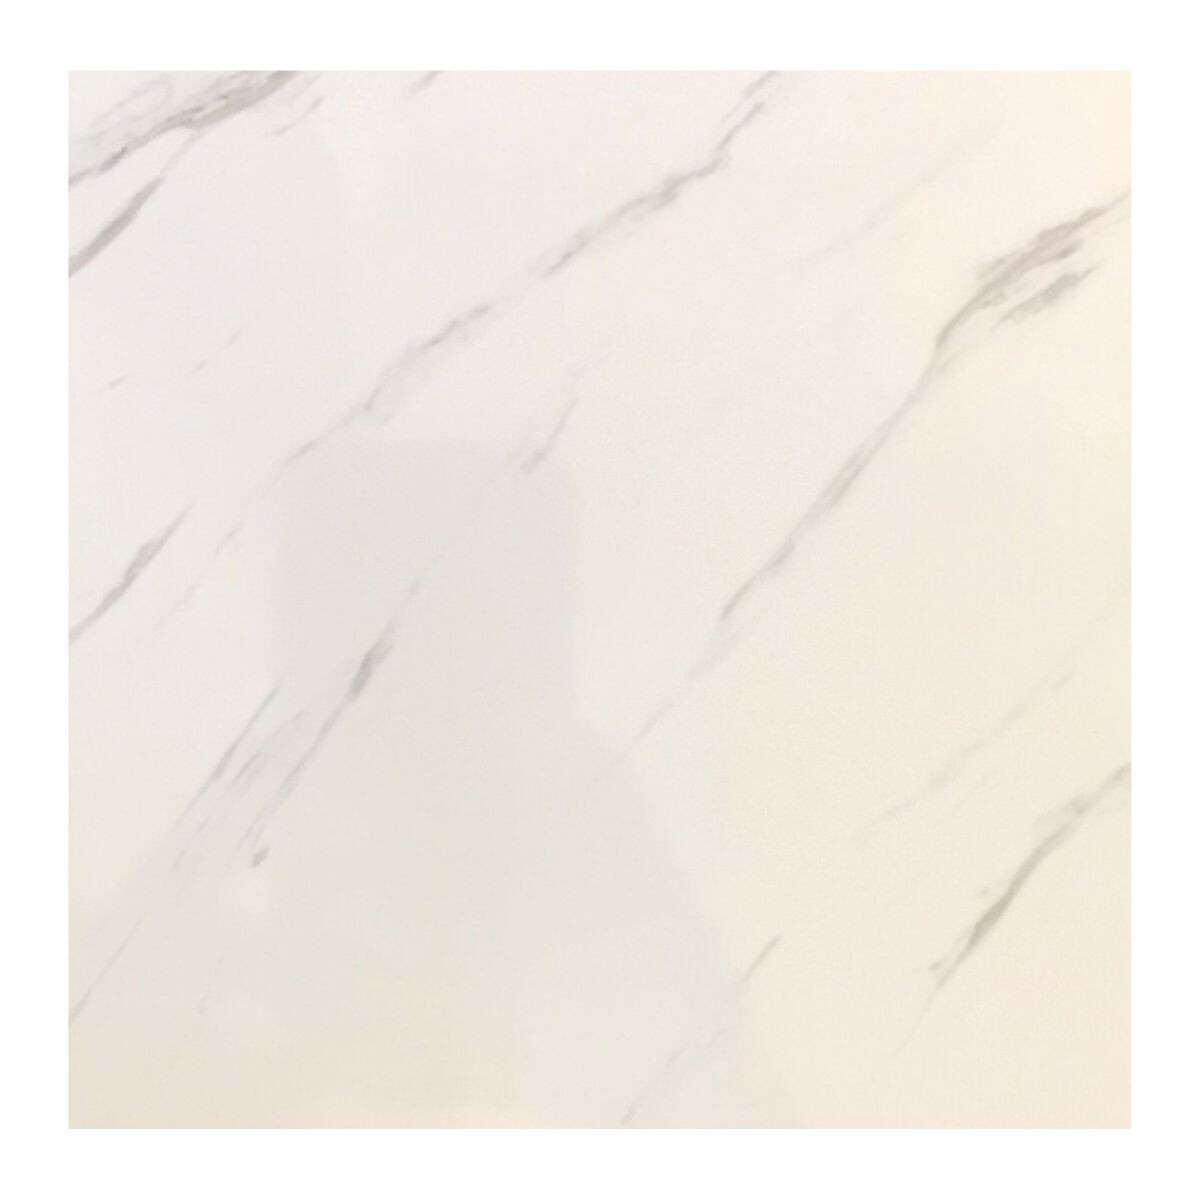 Panel Autoadhesivo simil Marmol Bianco 60x60cm 